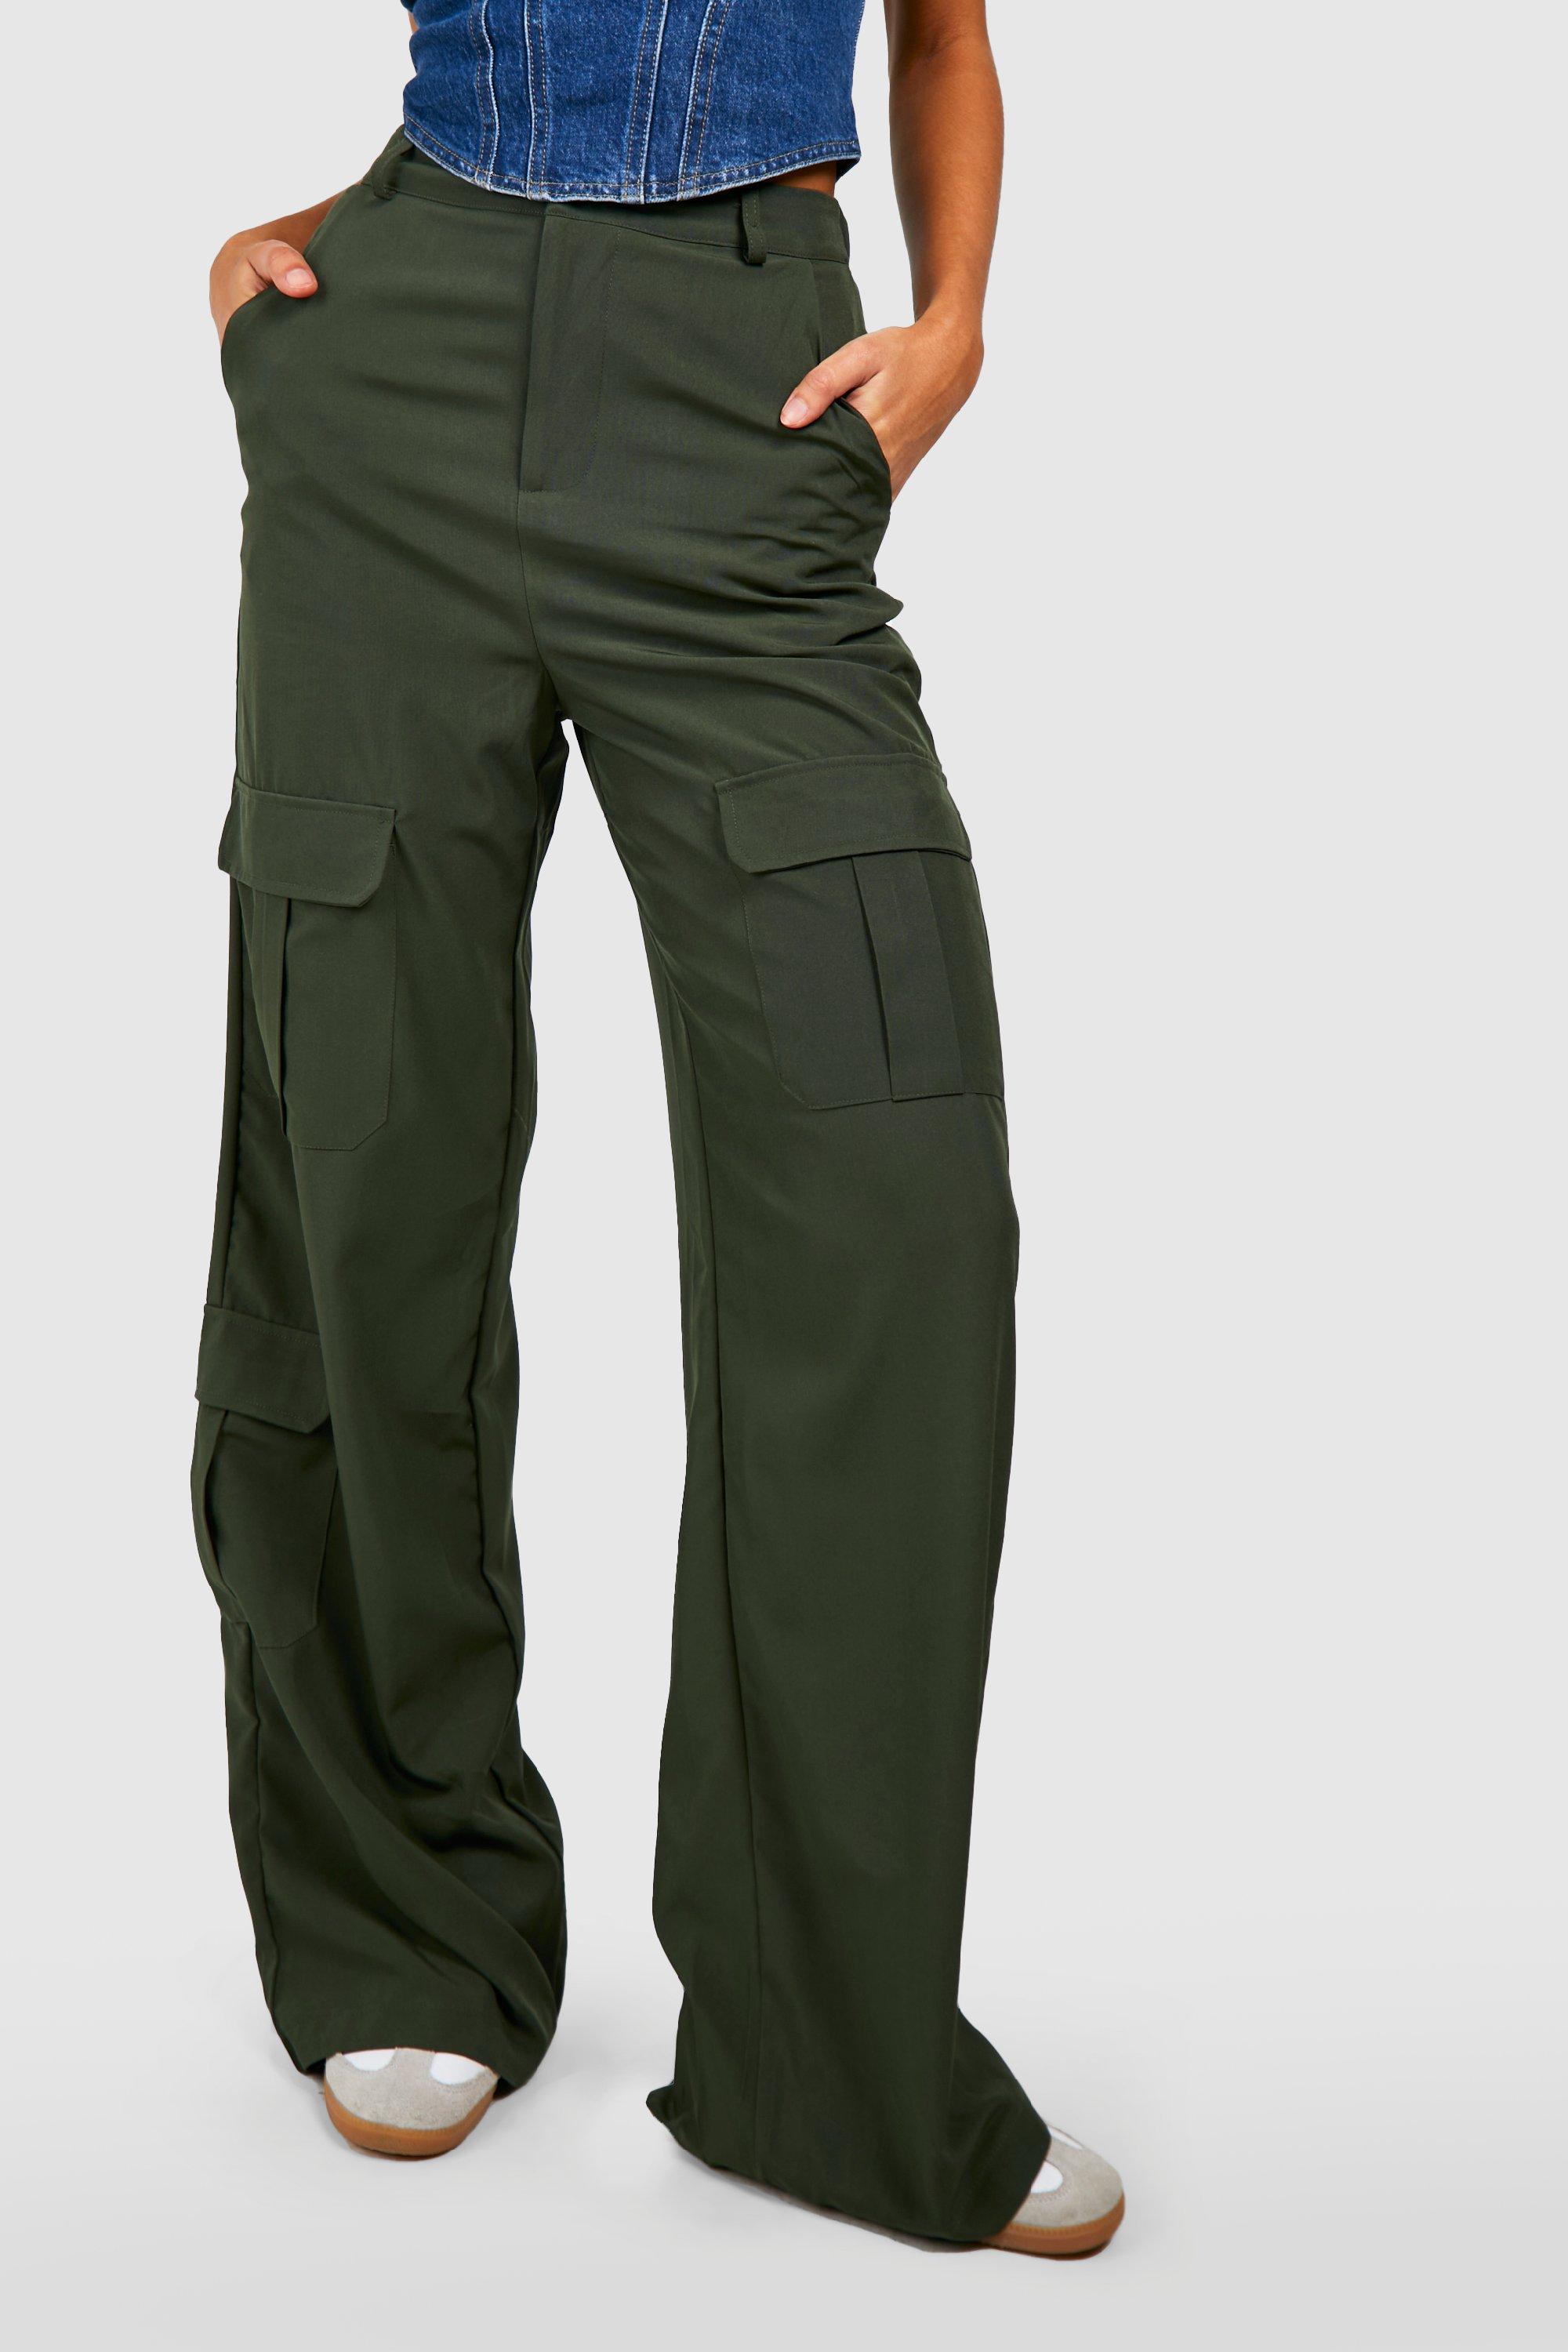 Tall Green High Waisted Pocket Detail Pants